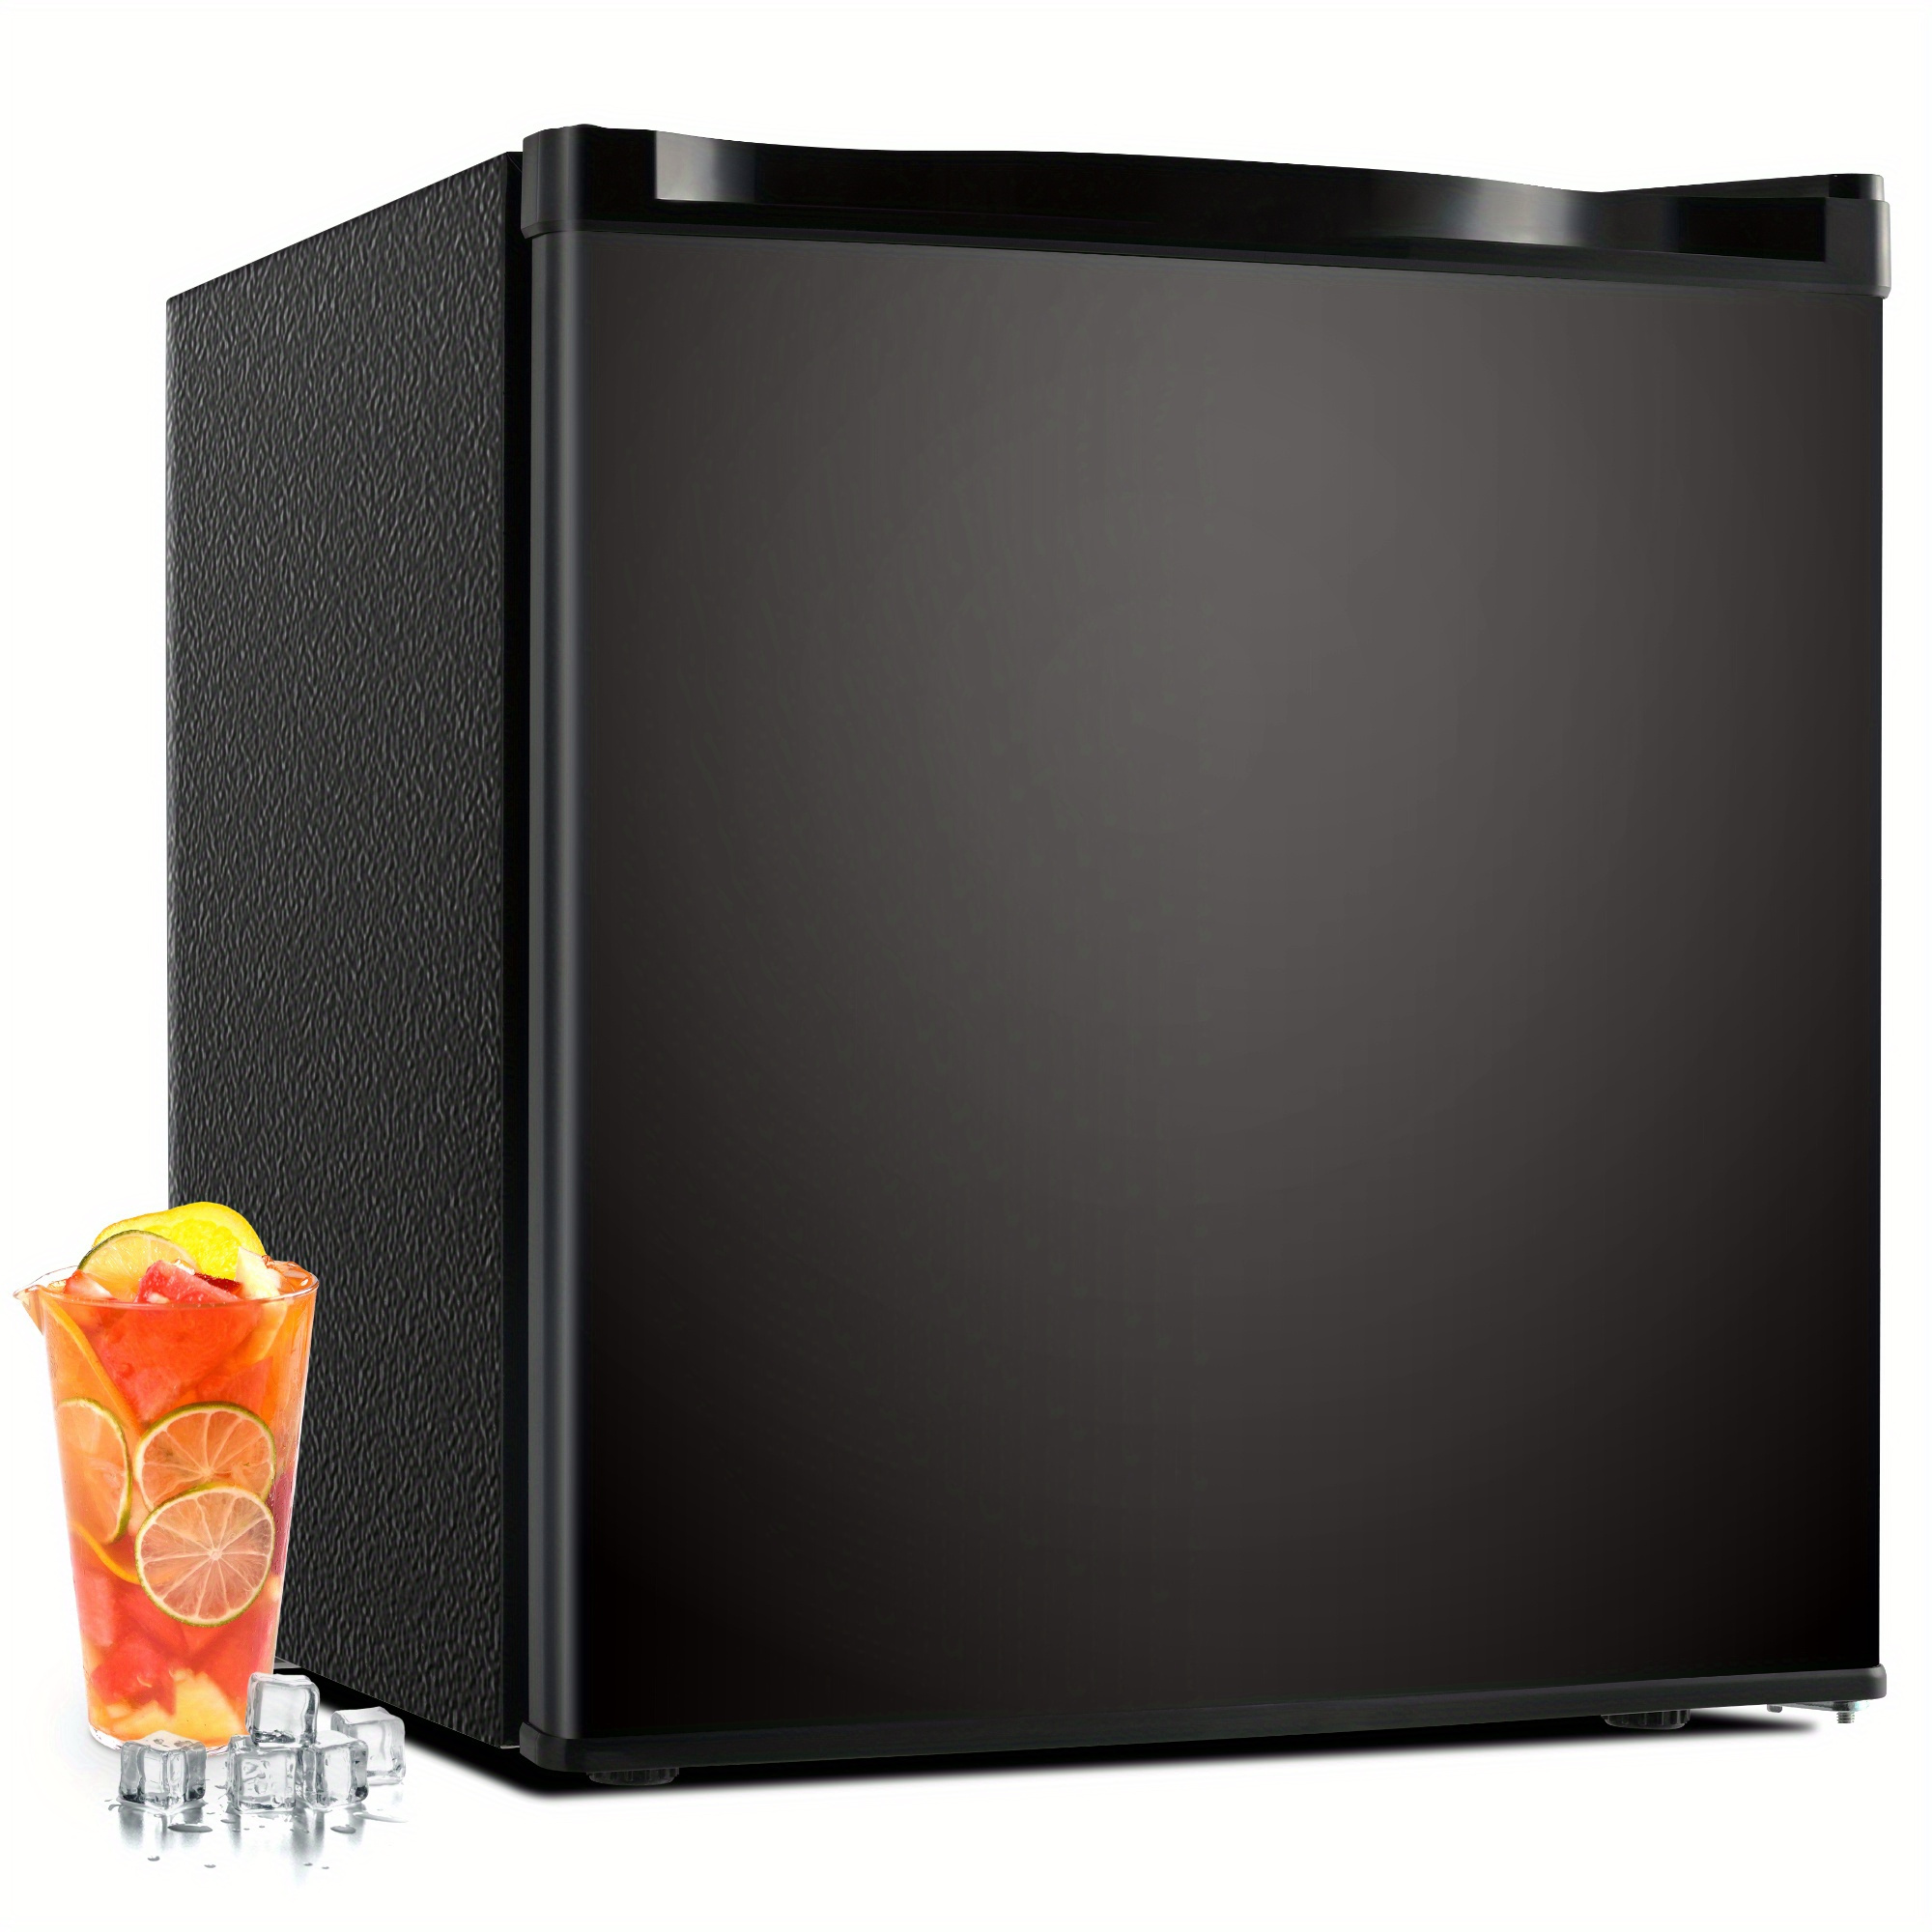 

Energy-efficient 1.7 Cu.ft Mini Fridge With Freezer - With Reversible Single Door, Adjustable Thermostat - Ideal For Bedroom, Office, Dorm - Sleek Black Design